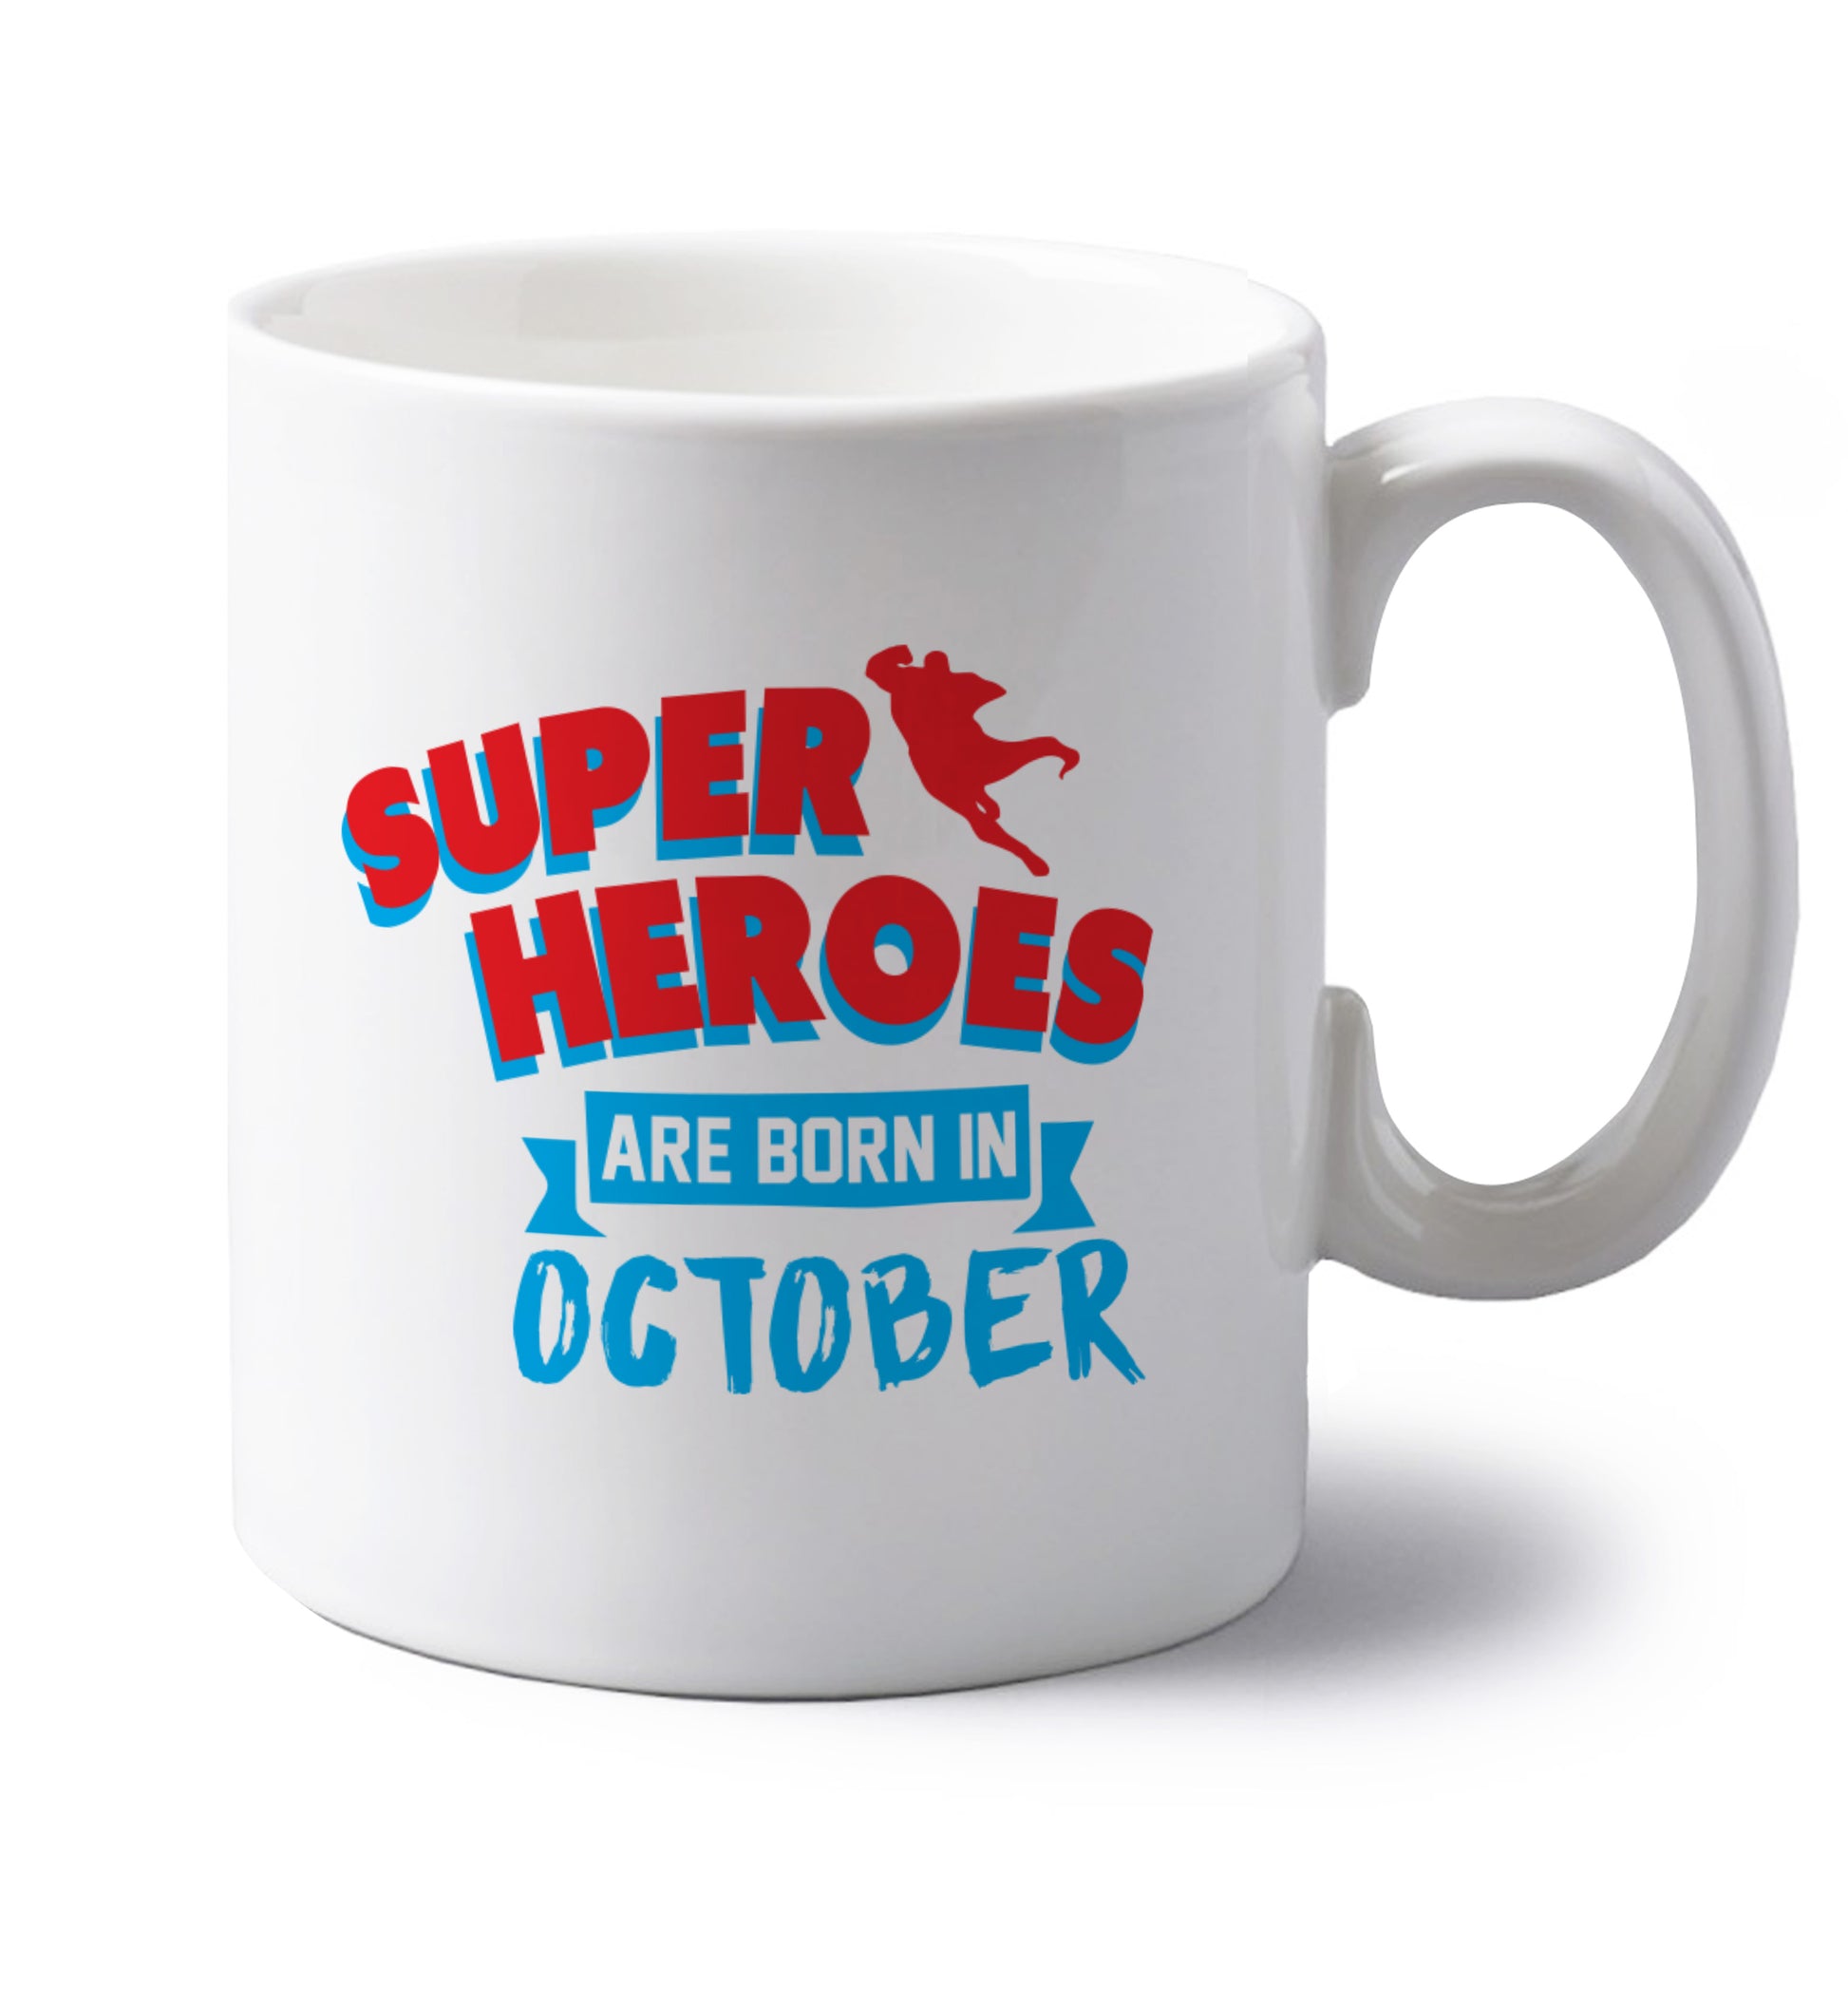 Superheroes are born in October left handed white ceramic mug 